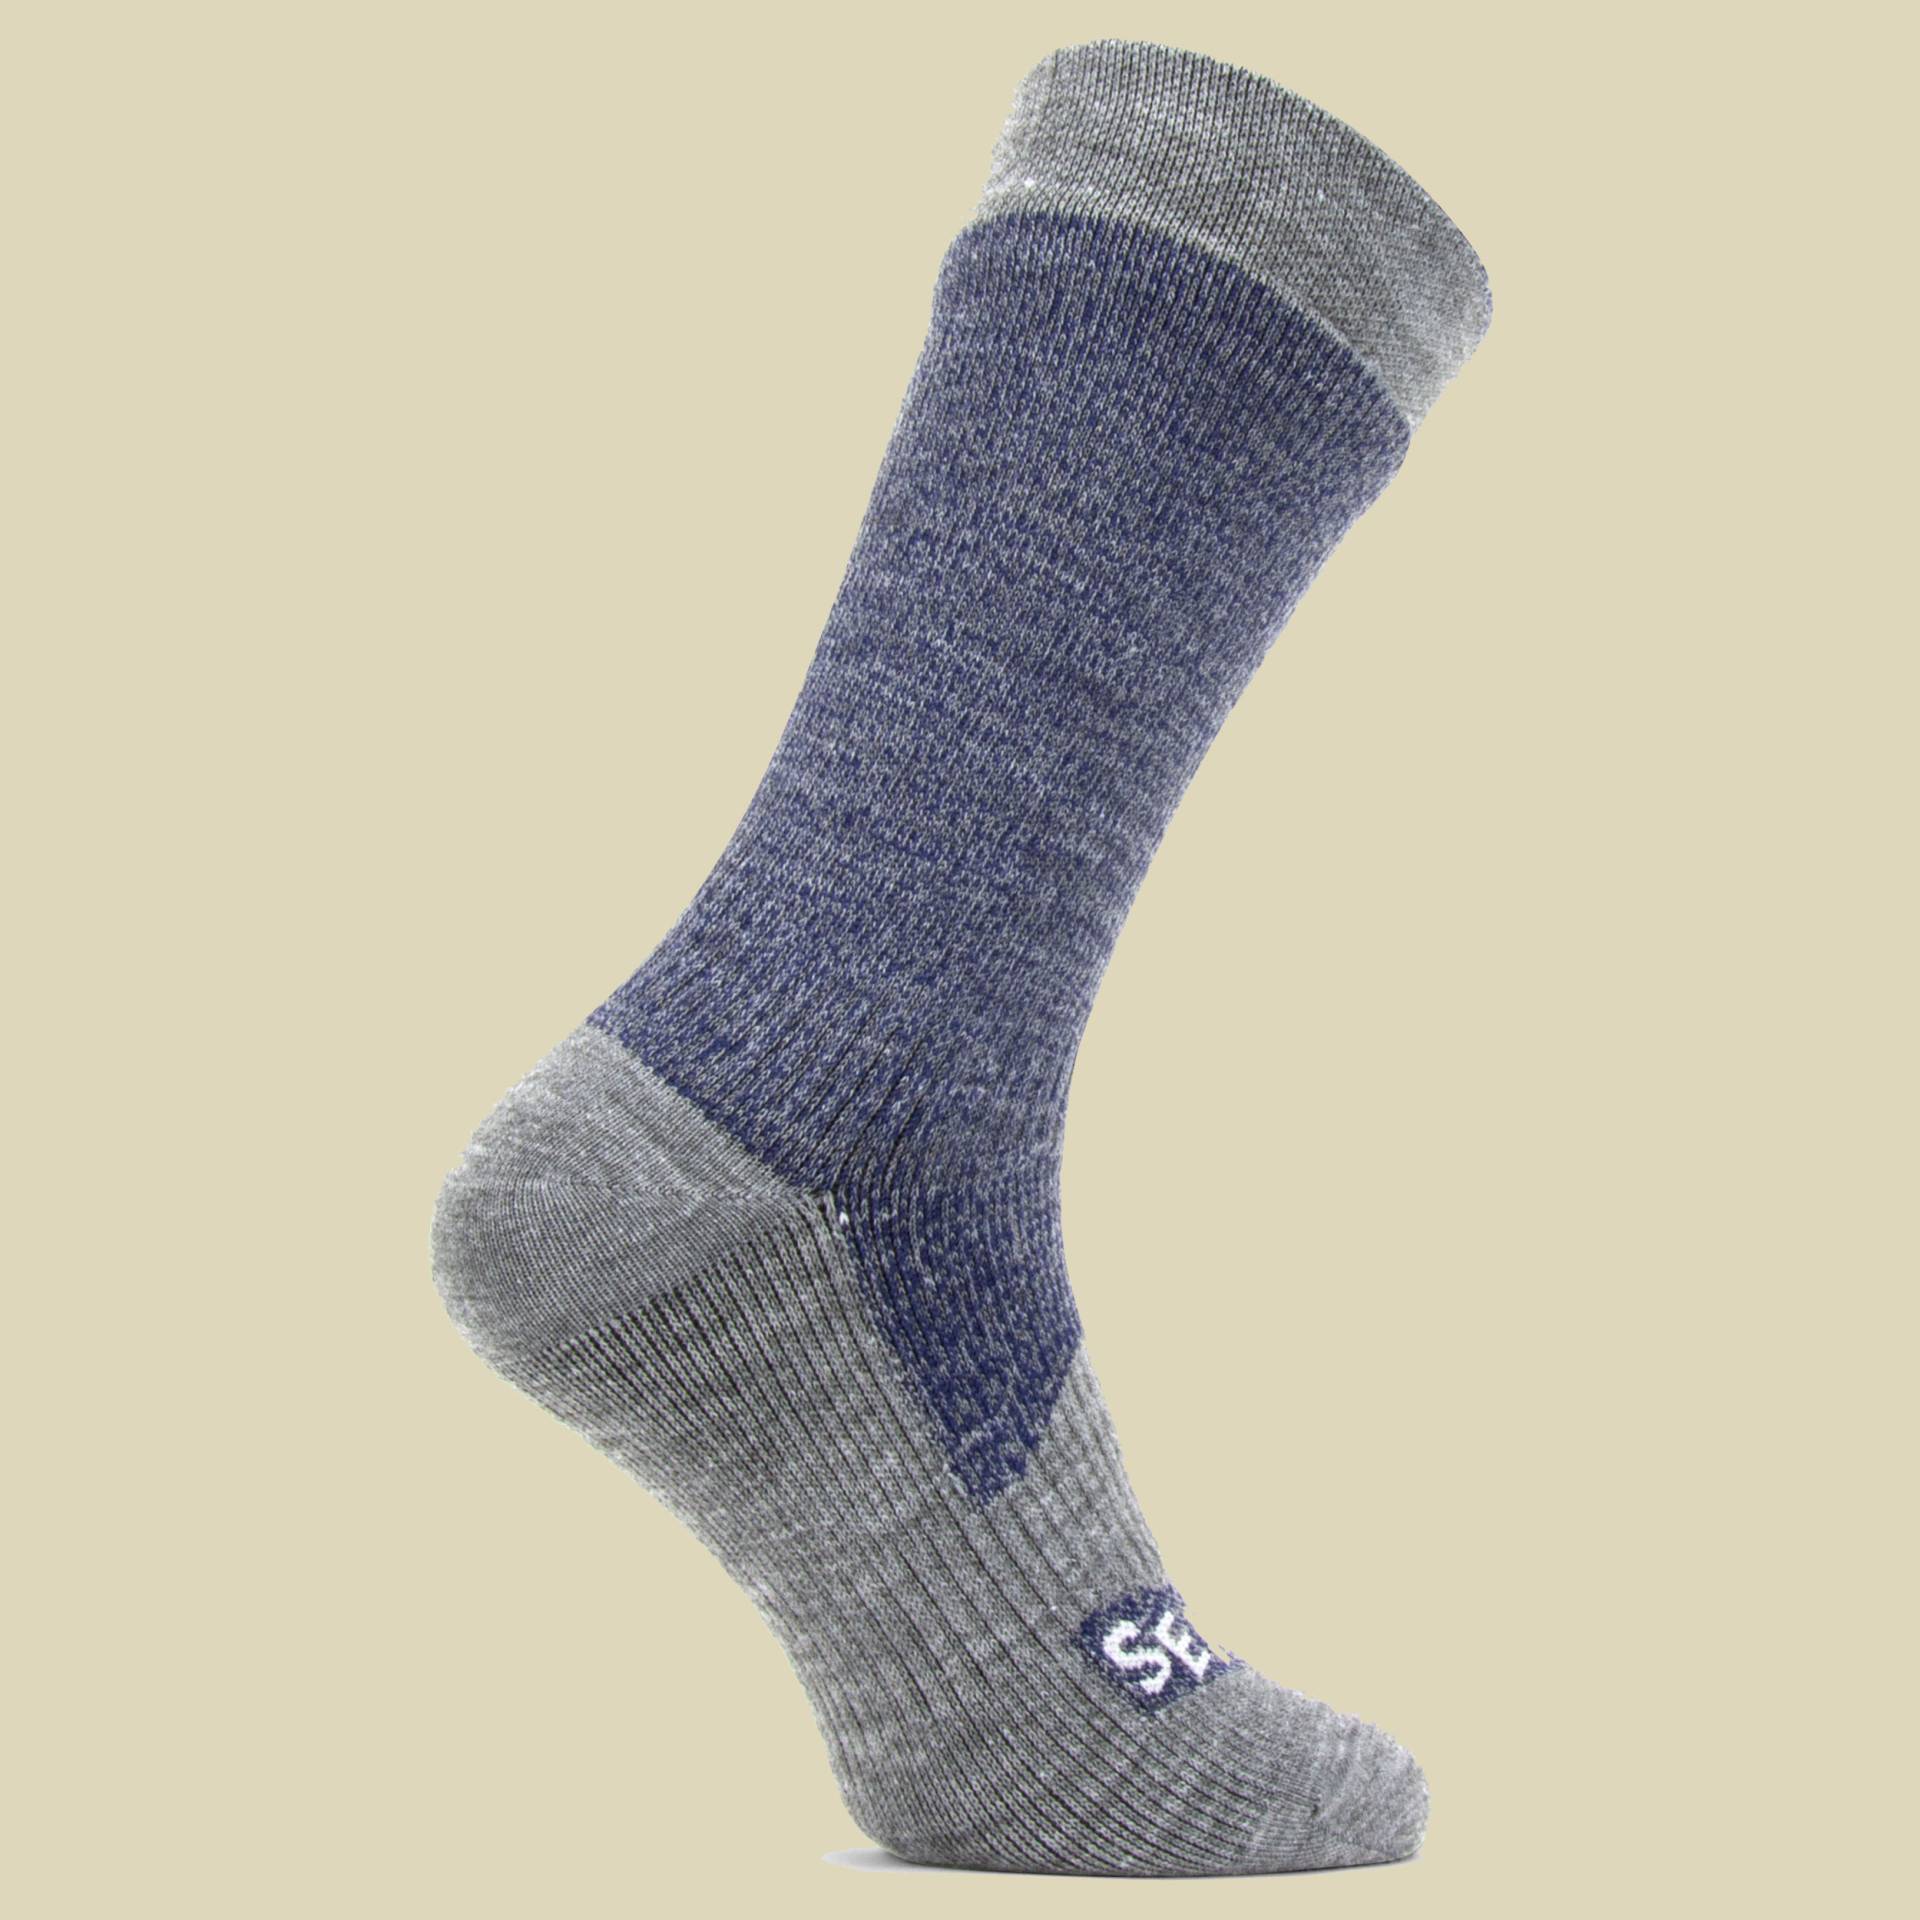 Waterproof All Weather Mid Length Sock Größe S (36-38) Farbe navy blue/grey marl von SealSkinz